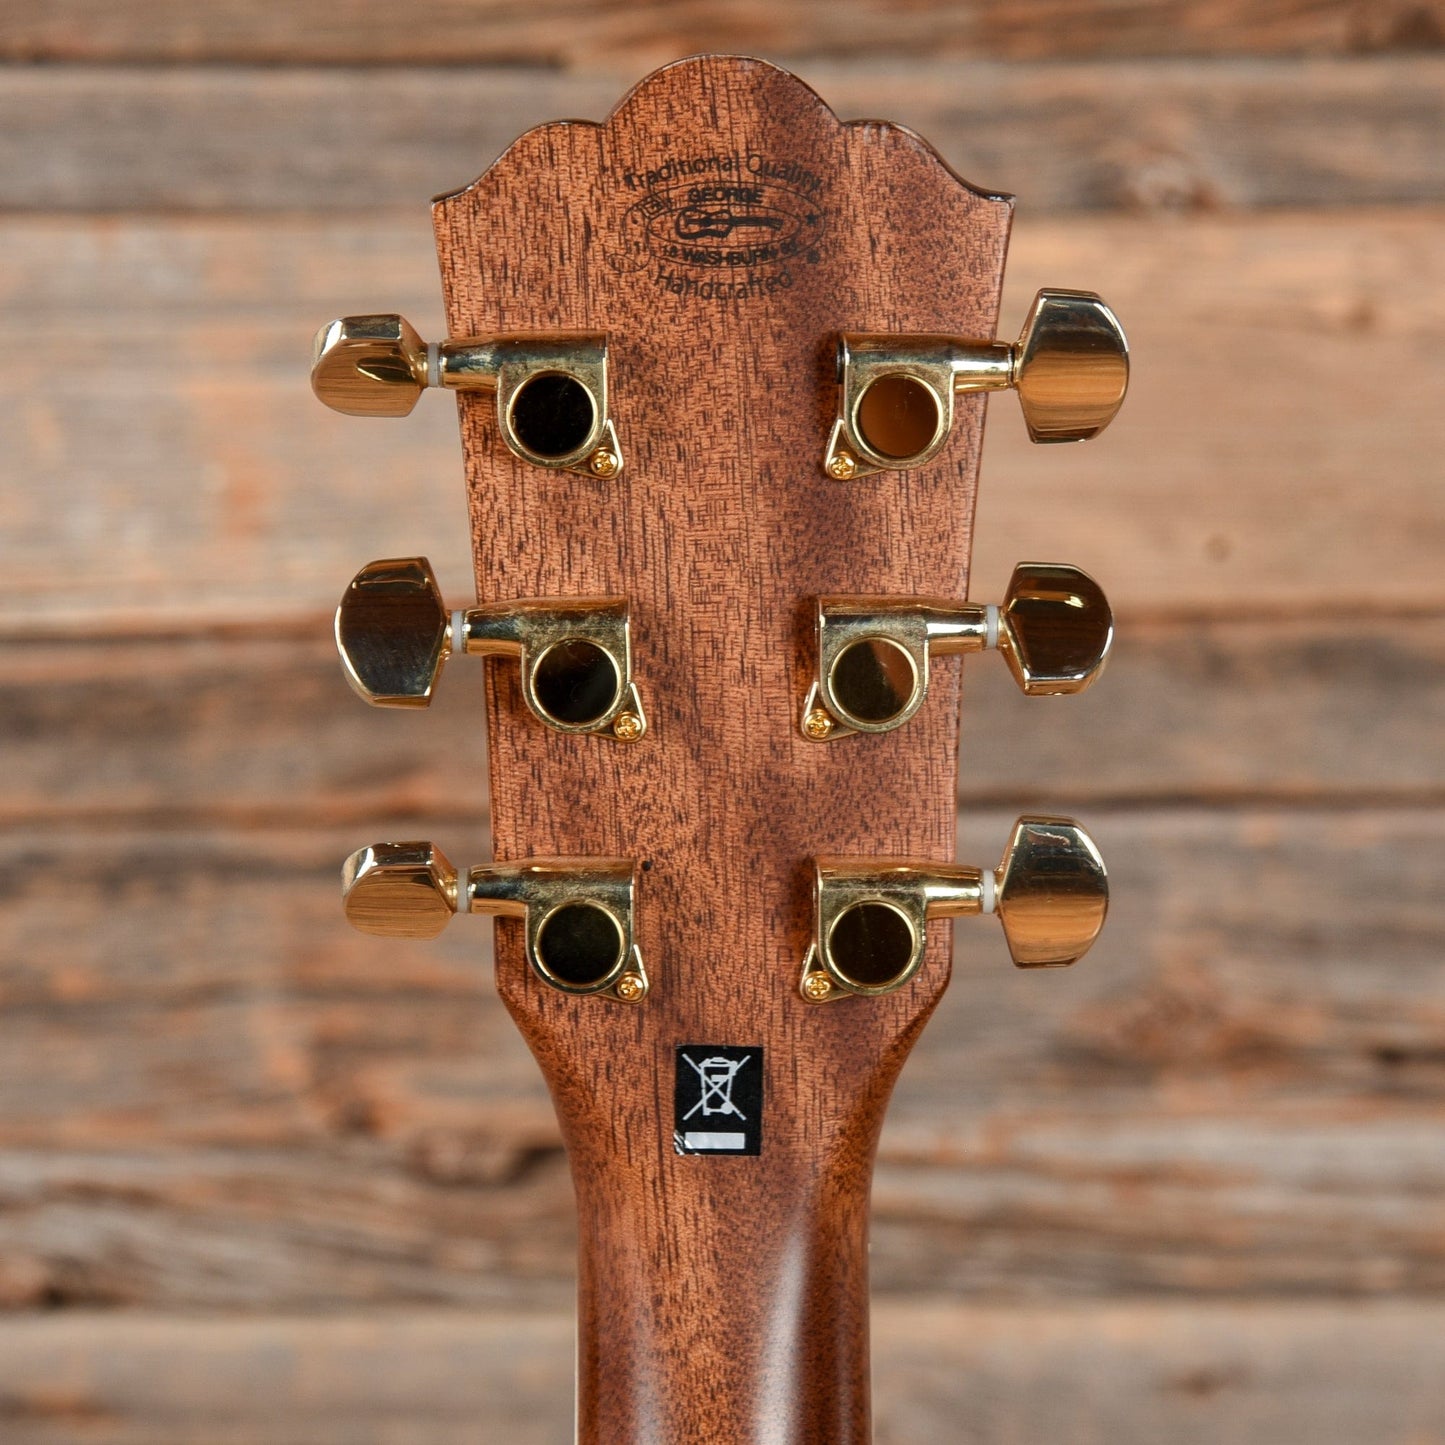 Washburn Heritage Series HD30S Natural 2015 Acoustic Guitars / Dreadnought